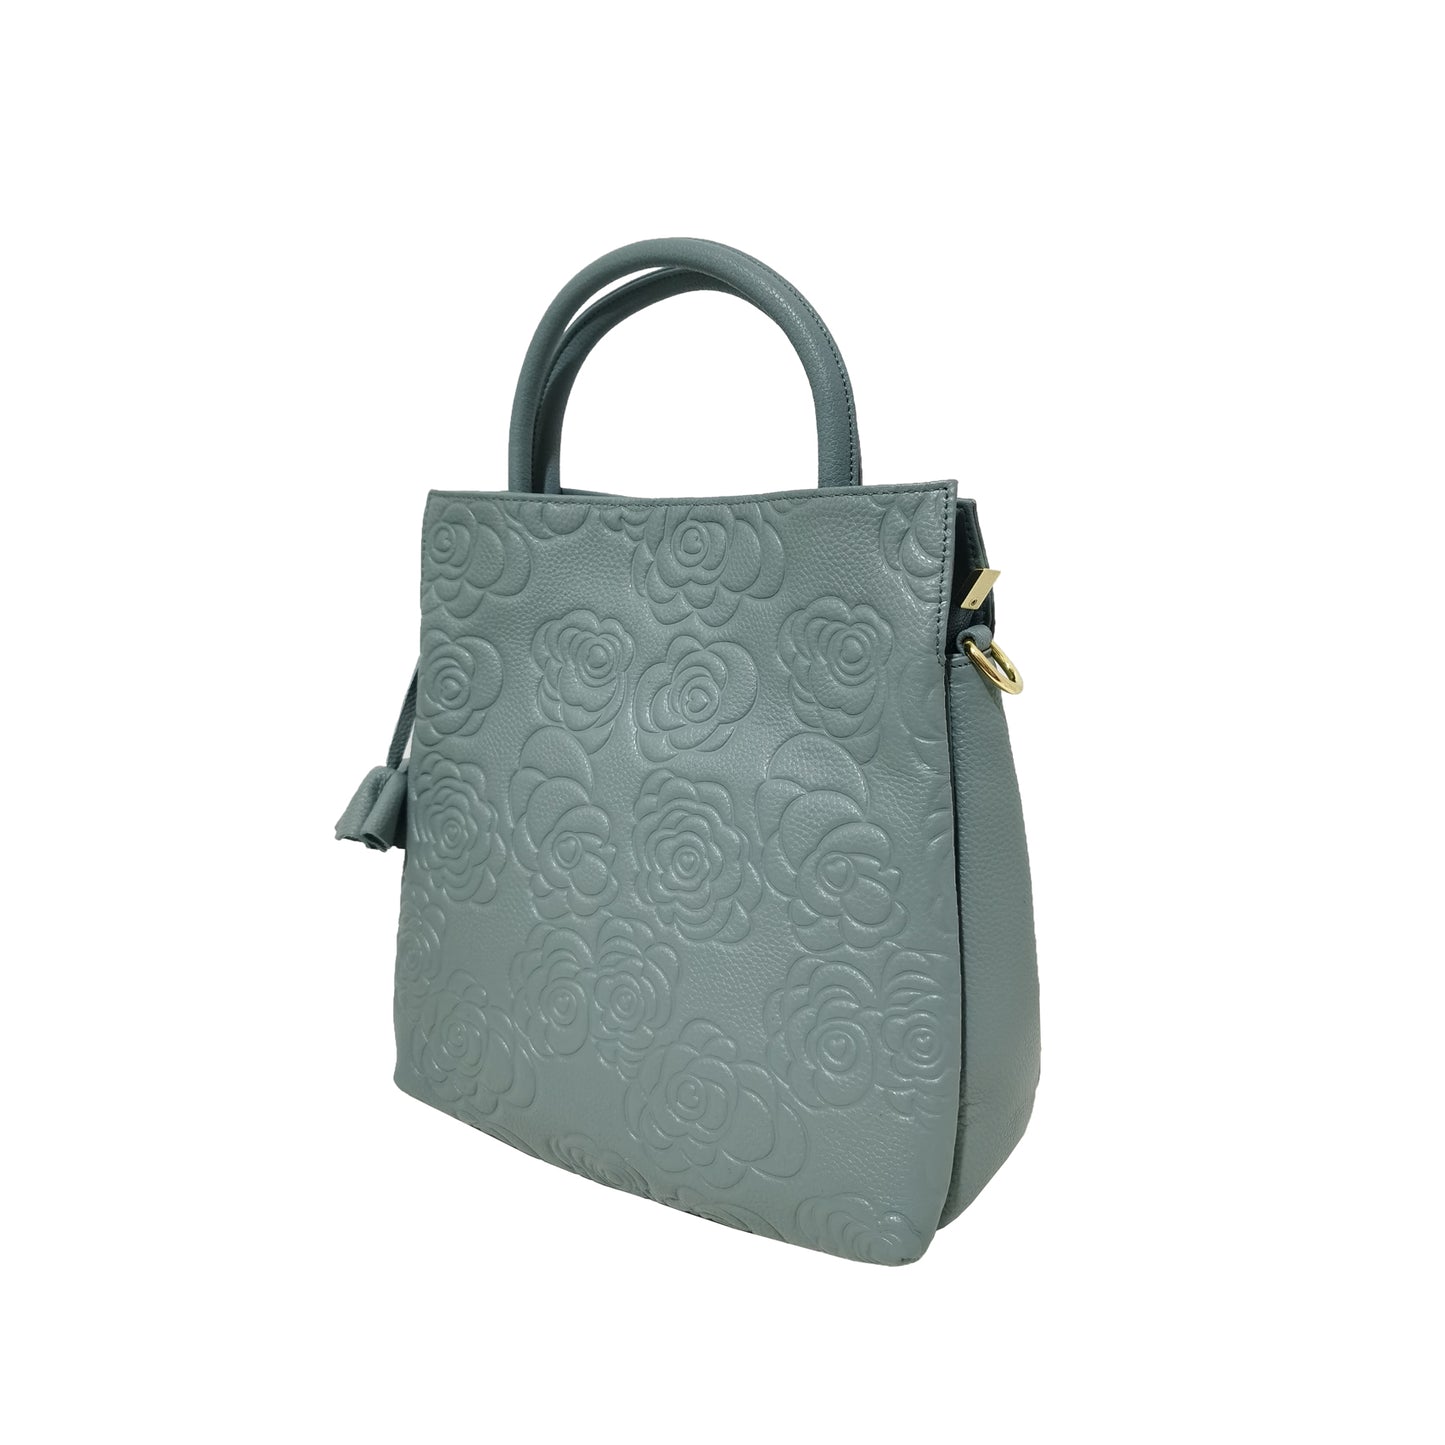 Women's genuine cowhide leather handbag Kriz design in floral print